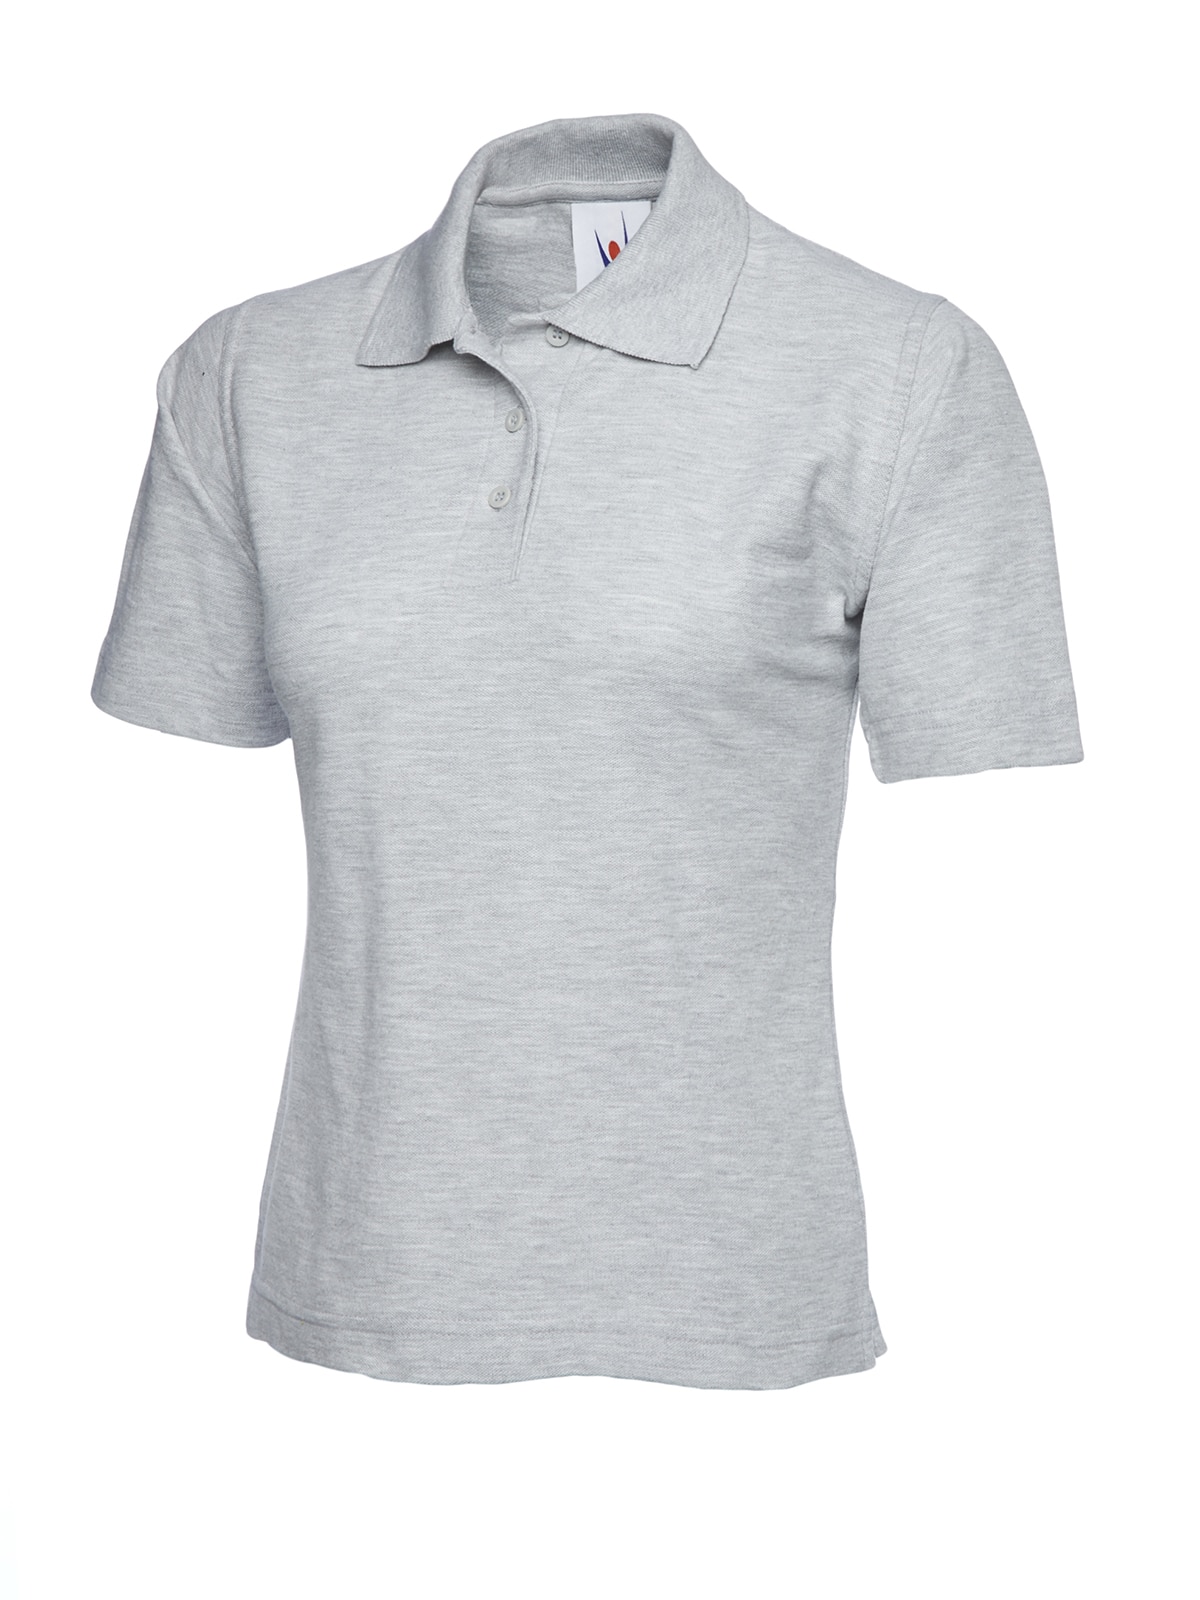 Uneek Ladies Poloshirt Classic Fit 220GSM Work Wear TOP Womens Polo shirt XS-4XL 